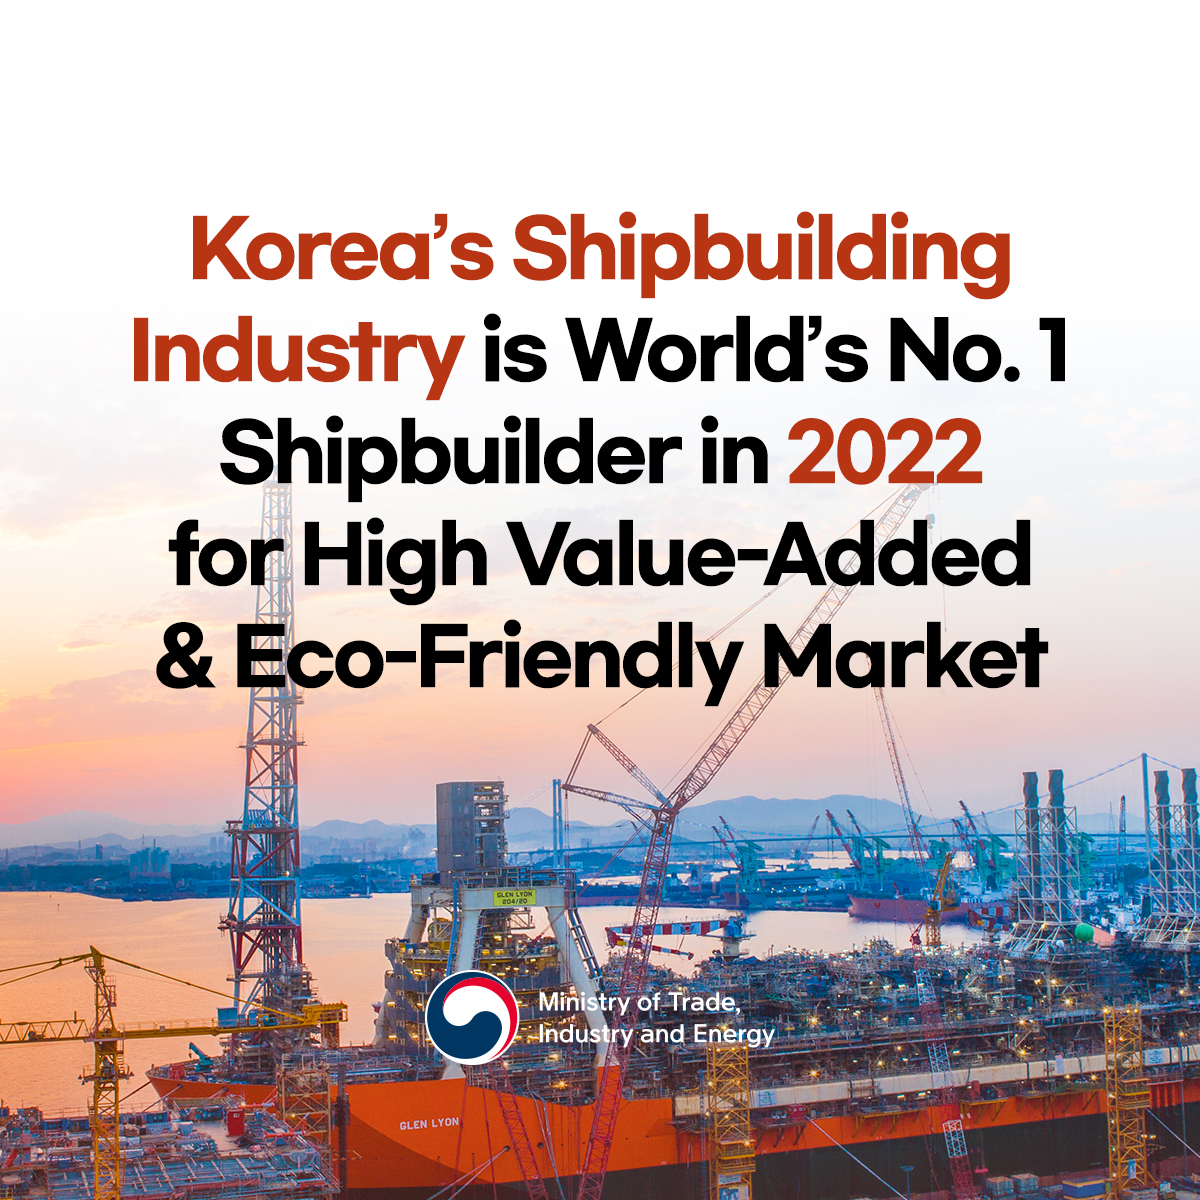 Korea's shipbuilders lead high value-added, eco-friendly market in 2022!